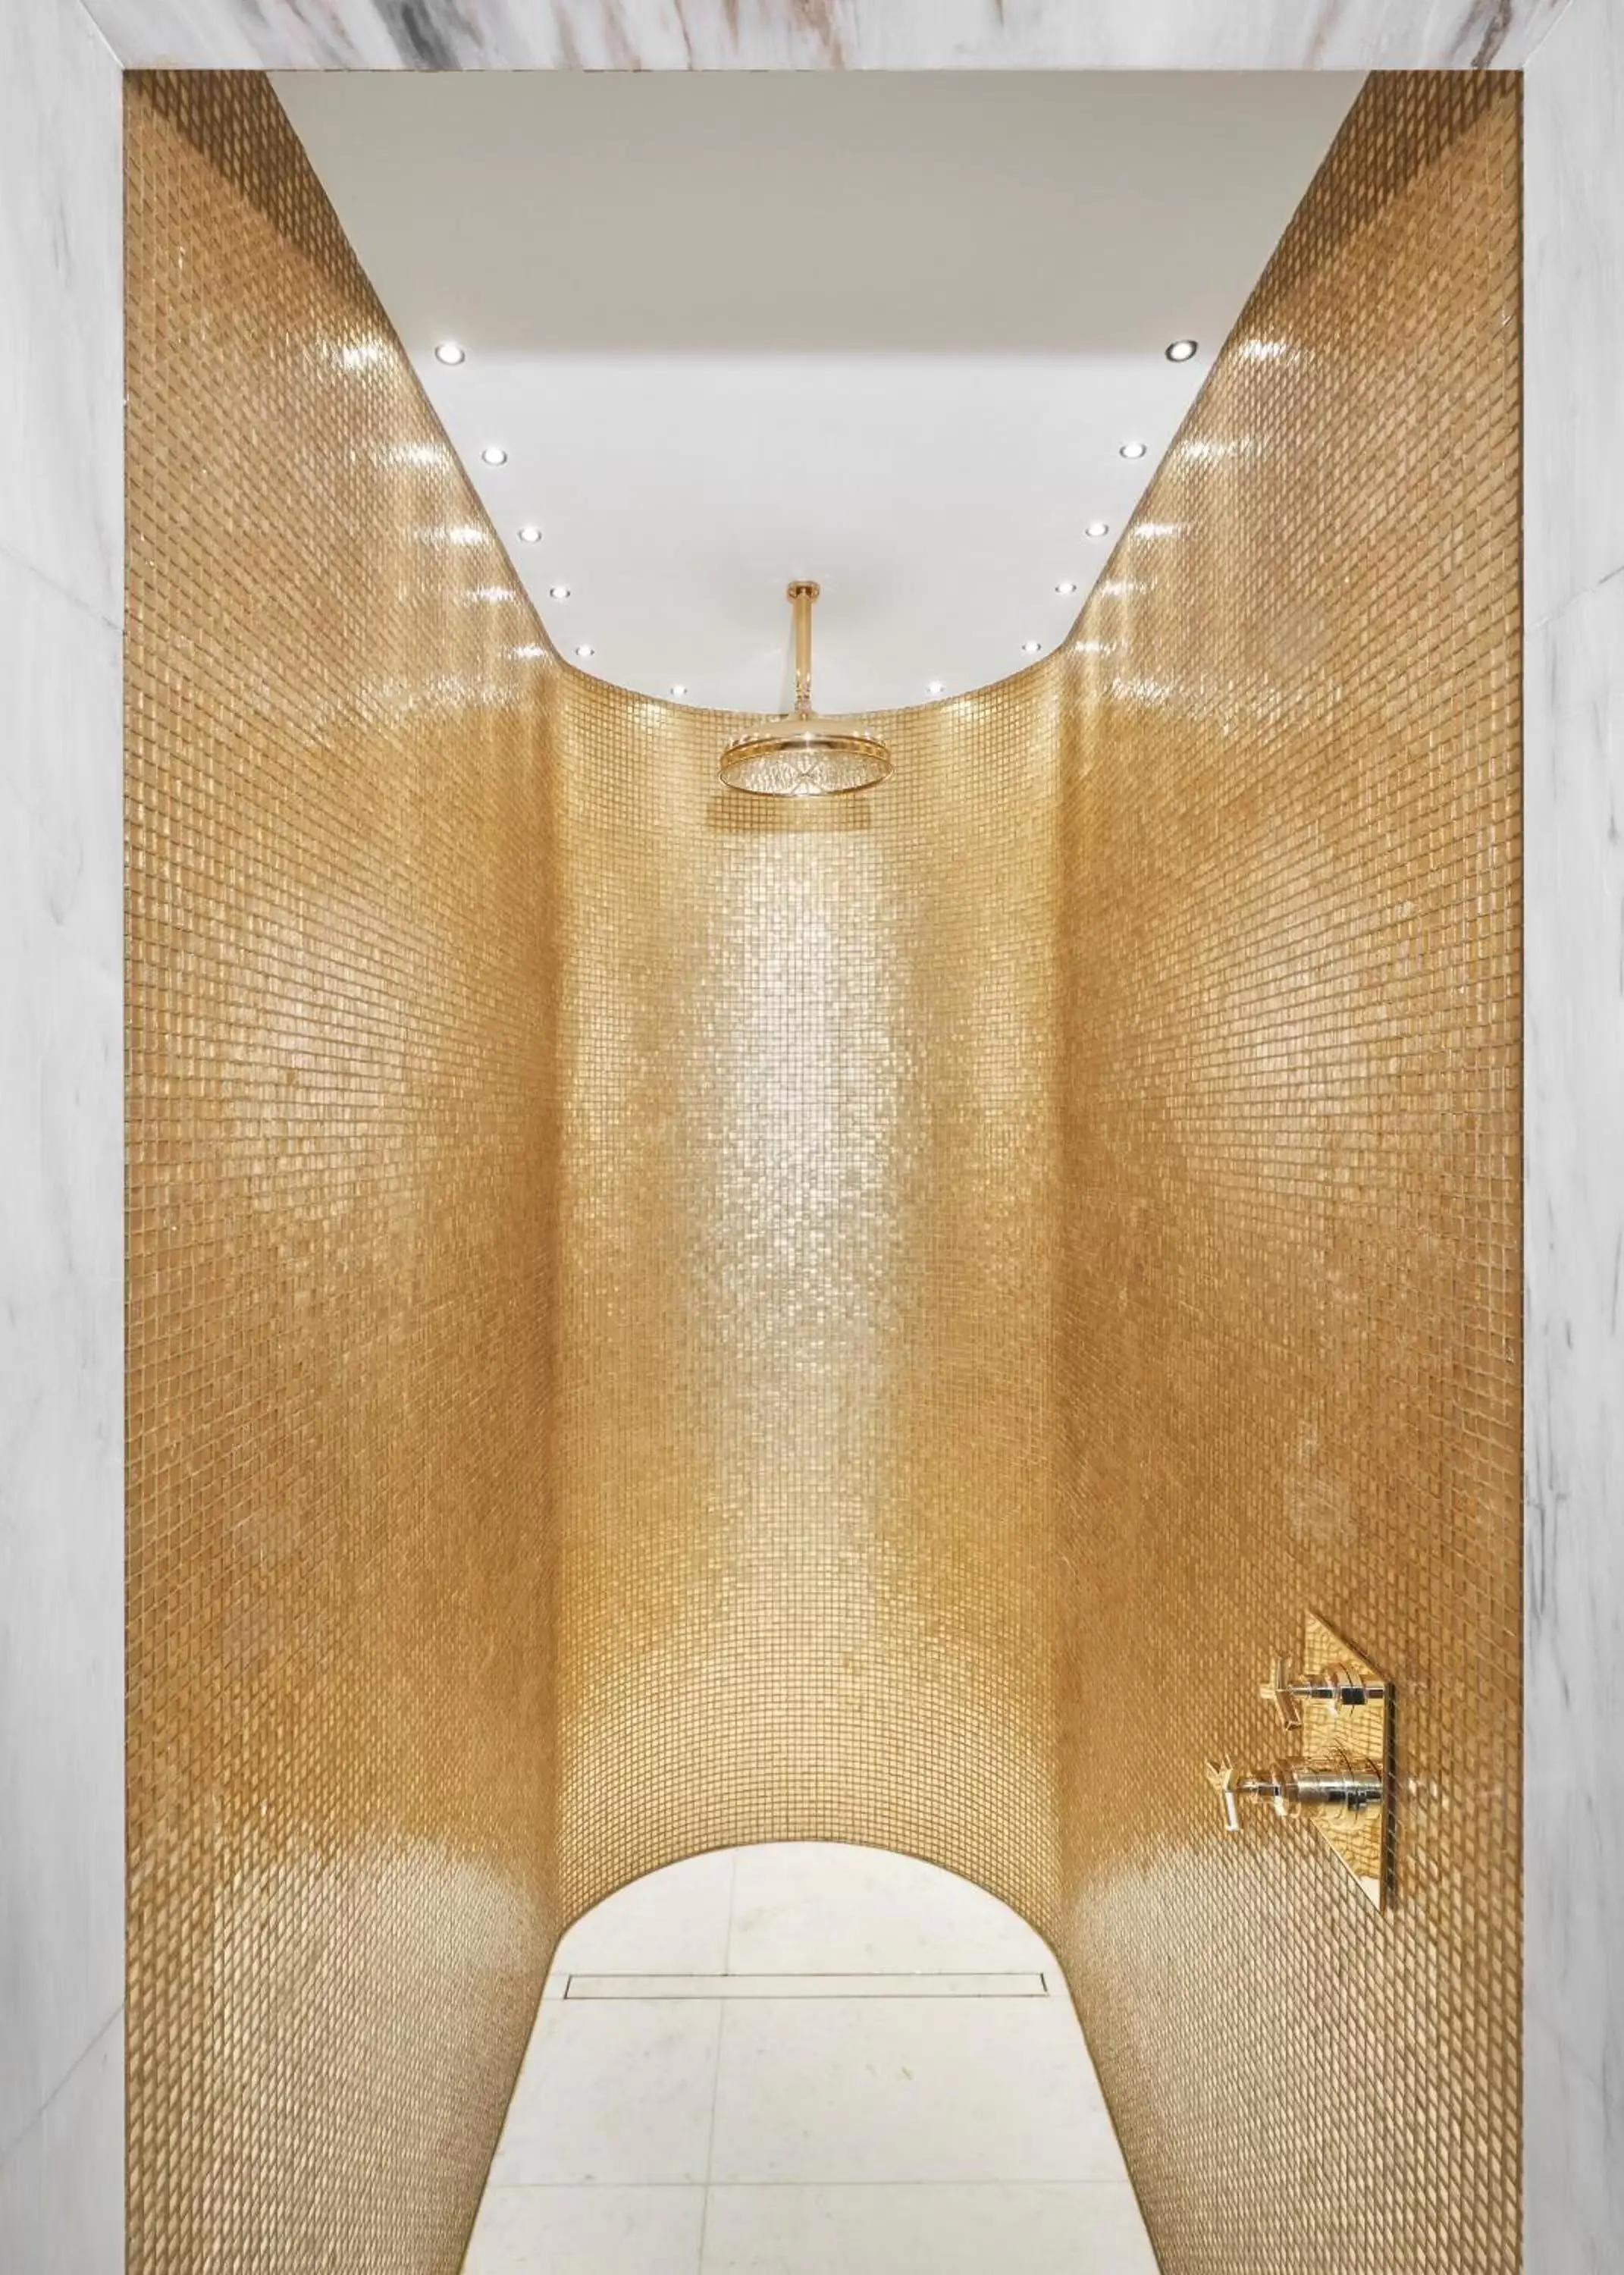 Spa and wellness centre/facilities, Bathroom in Mandarin Oriental, Ritz Madrid